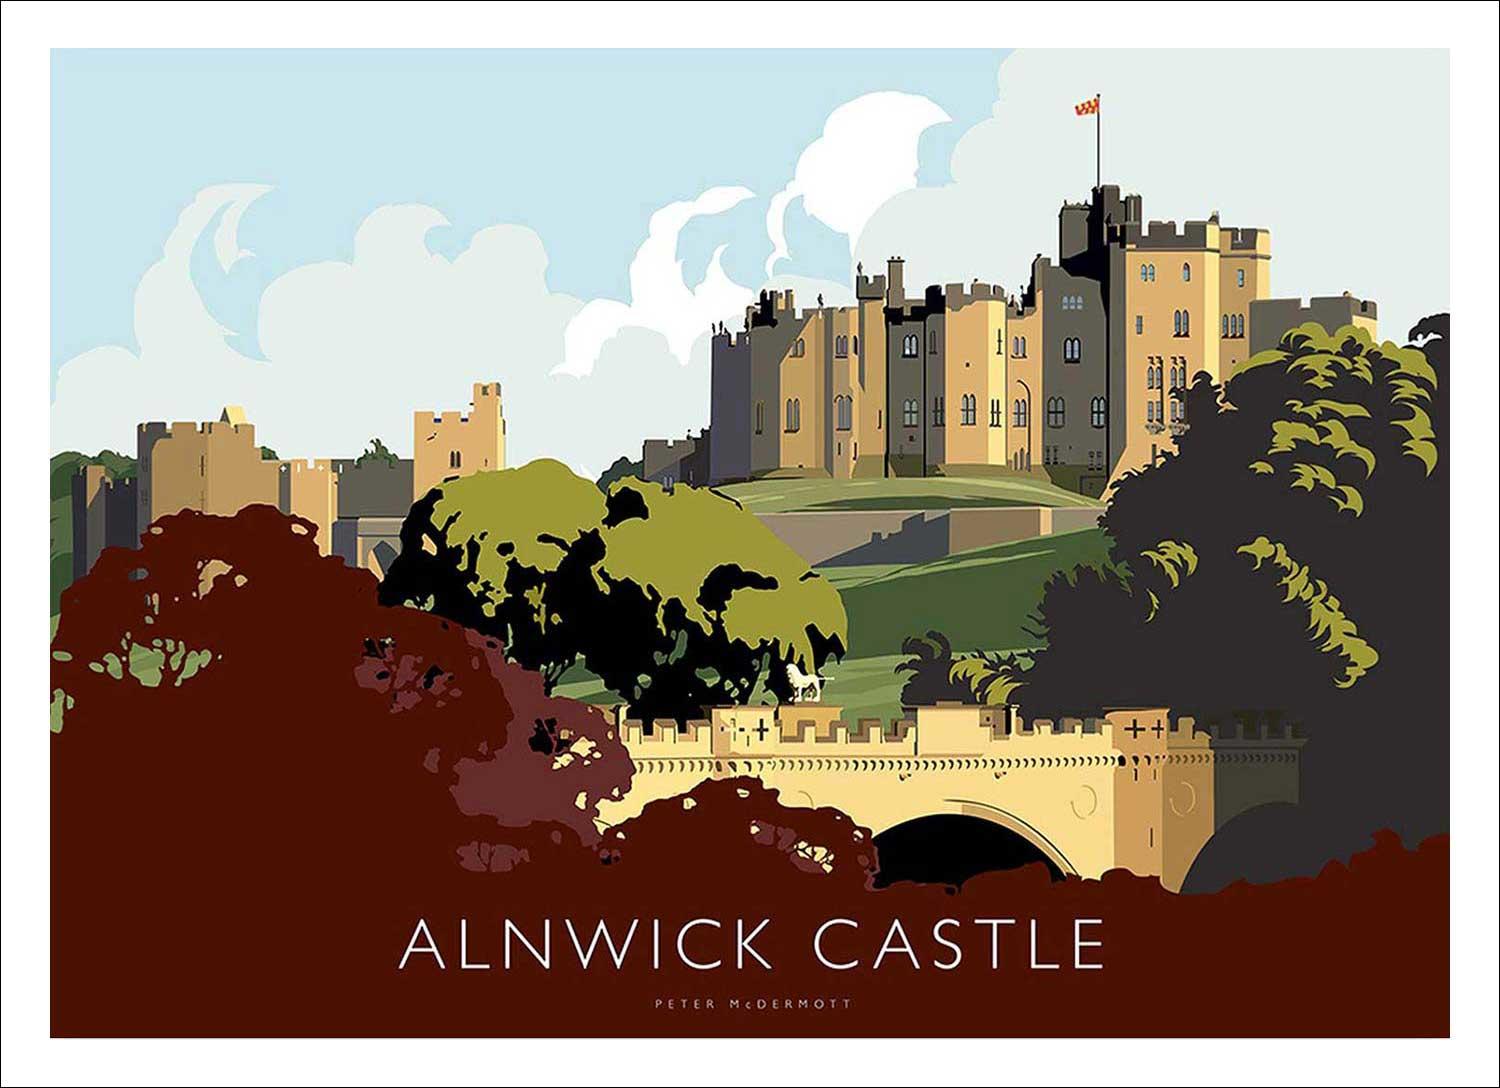 Alnwick Castle Art Print from an original illustration by artist Peter McDermott